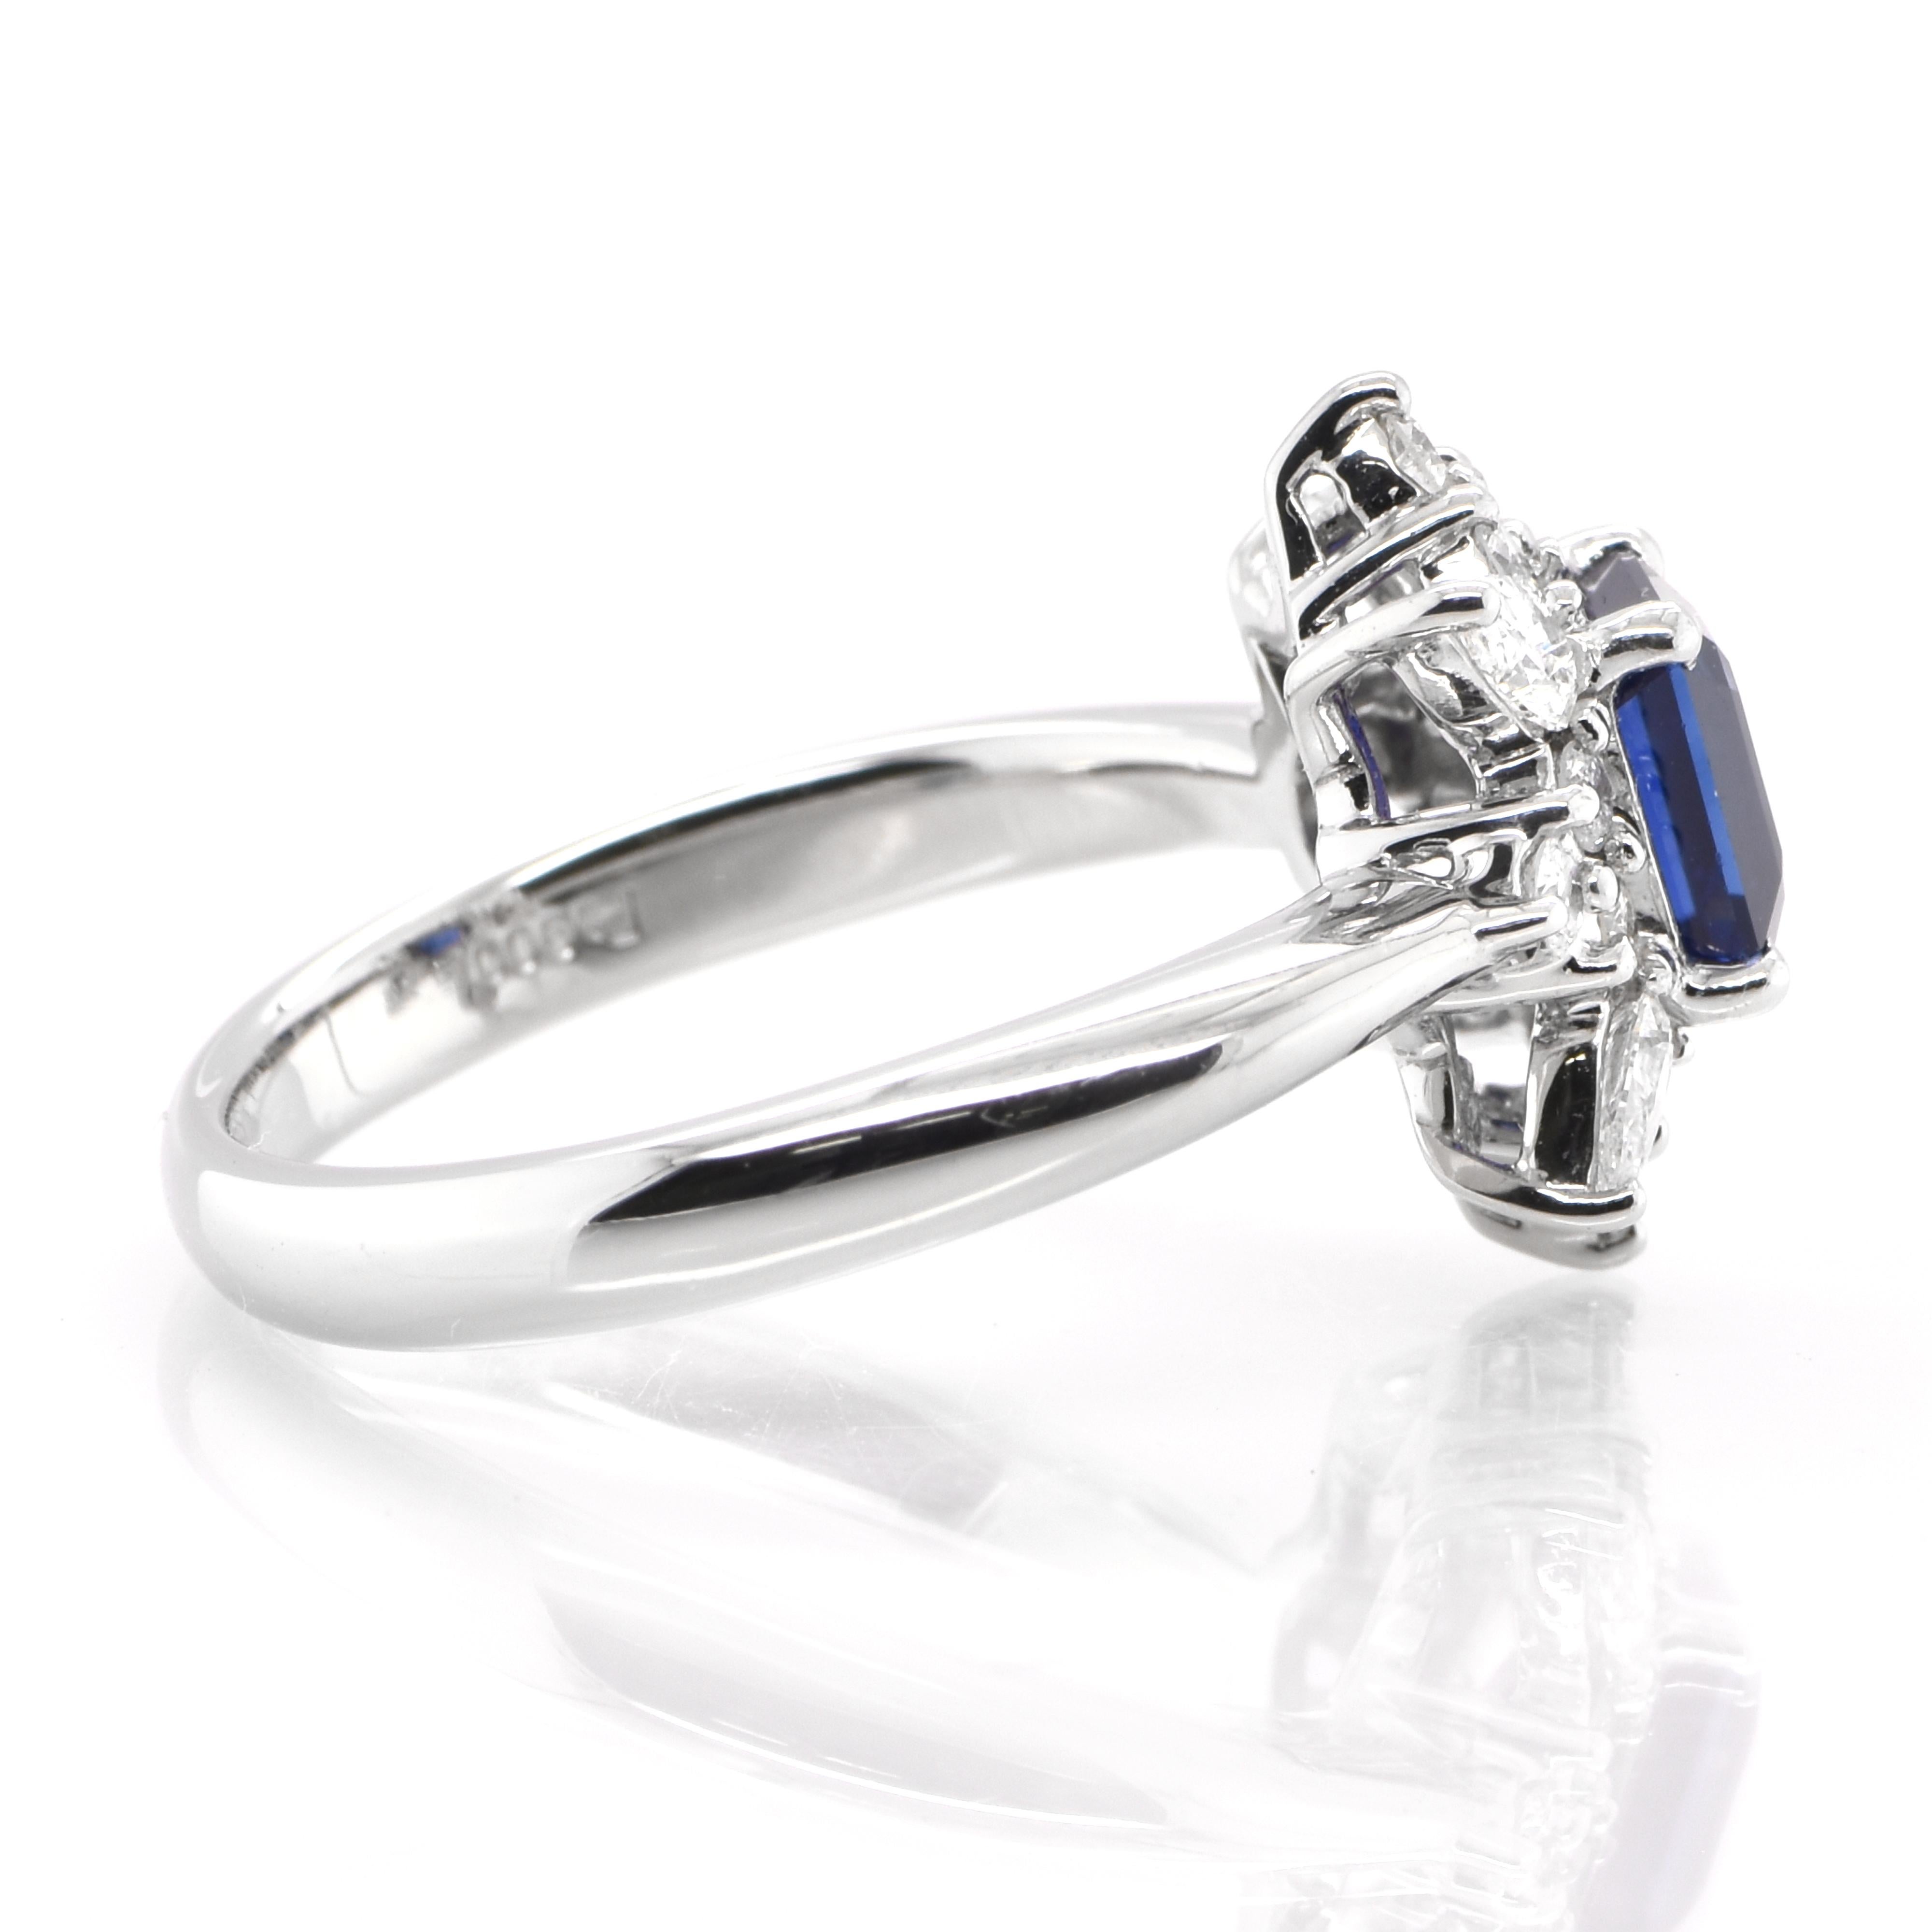 Modern 1.23 Carat Natural Emerald-Cut Sapphire and Diamond Halo Ring Set in Platinum